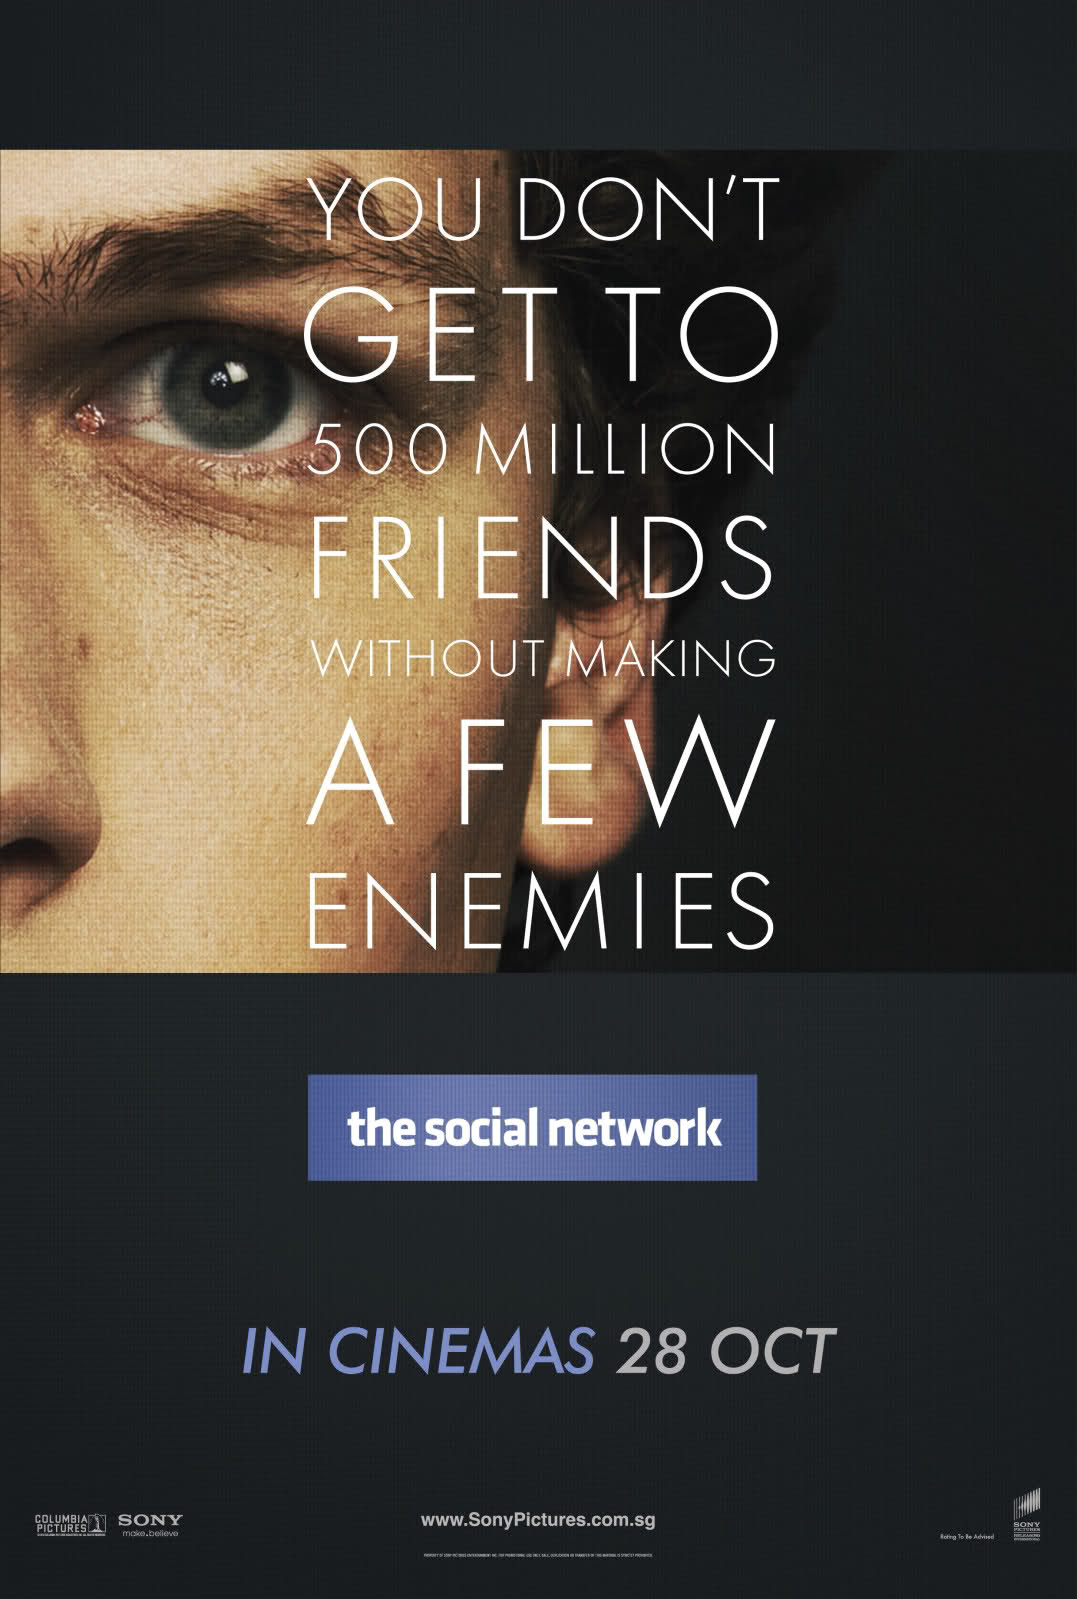 Stiahni si Filmy CZ/SK dabing Socialni sit / The Social Network (2010)(CZ) = CSFD 81%